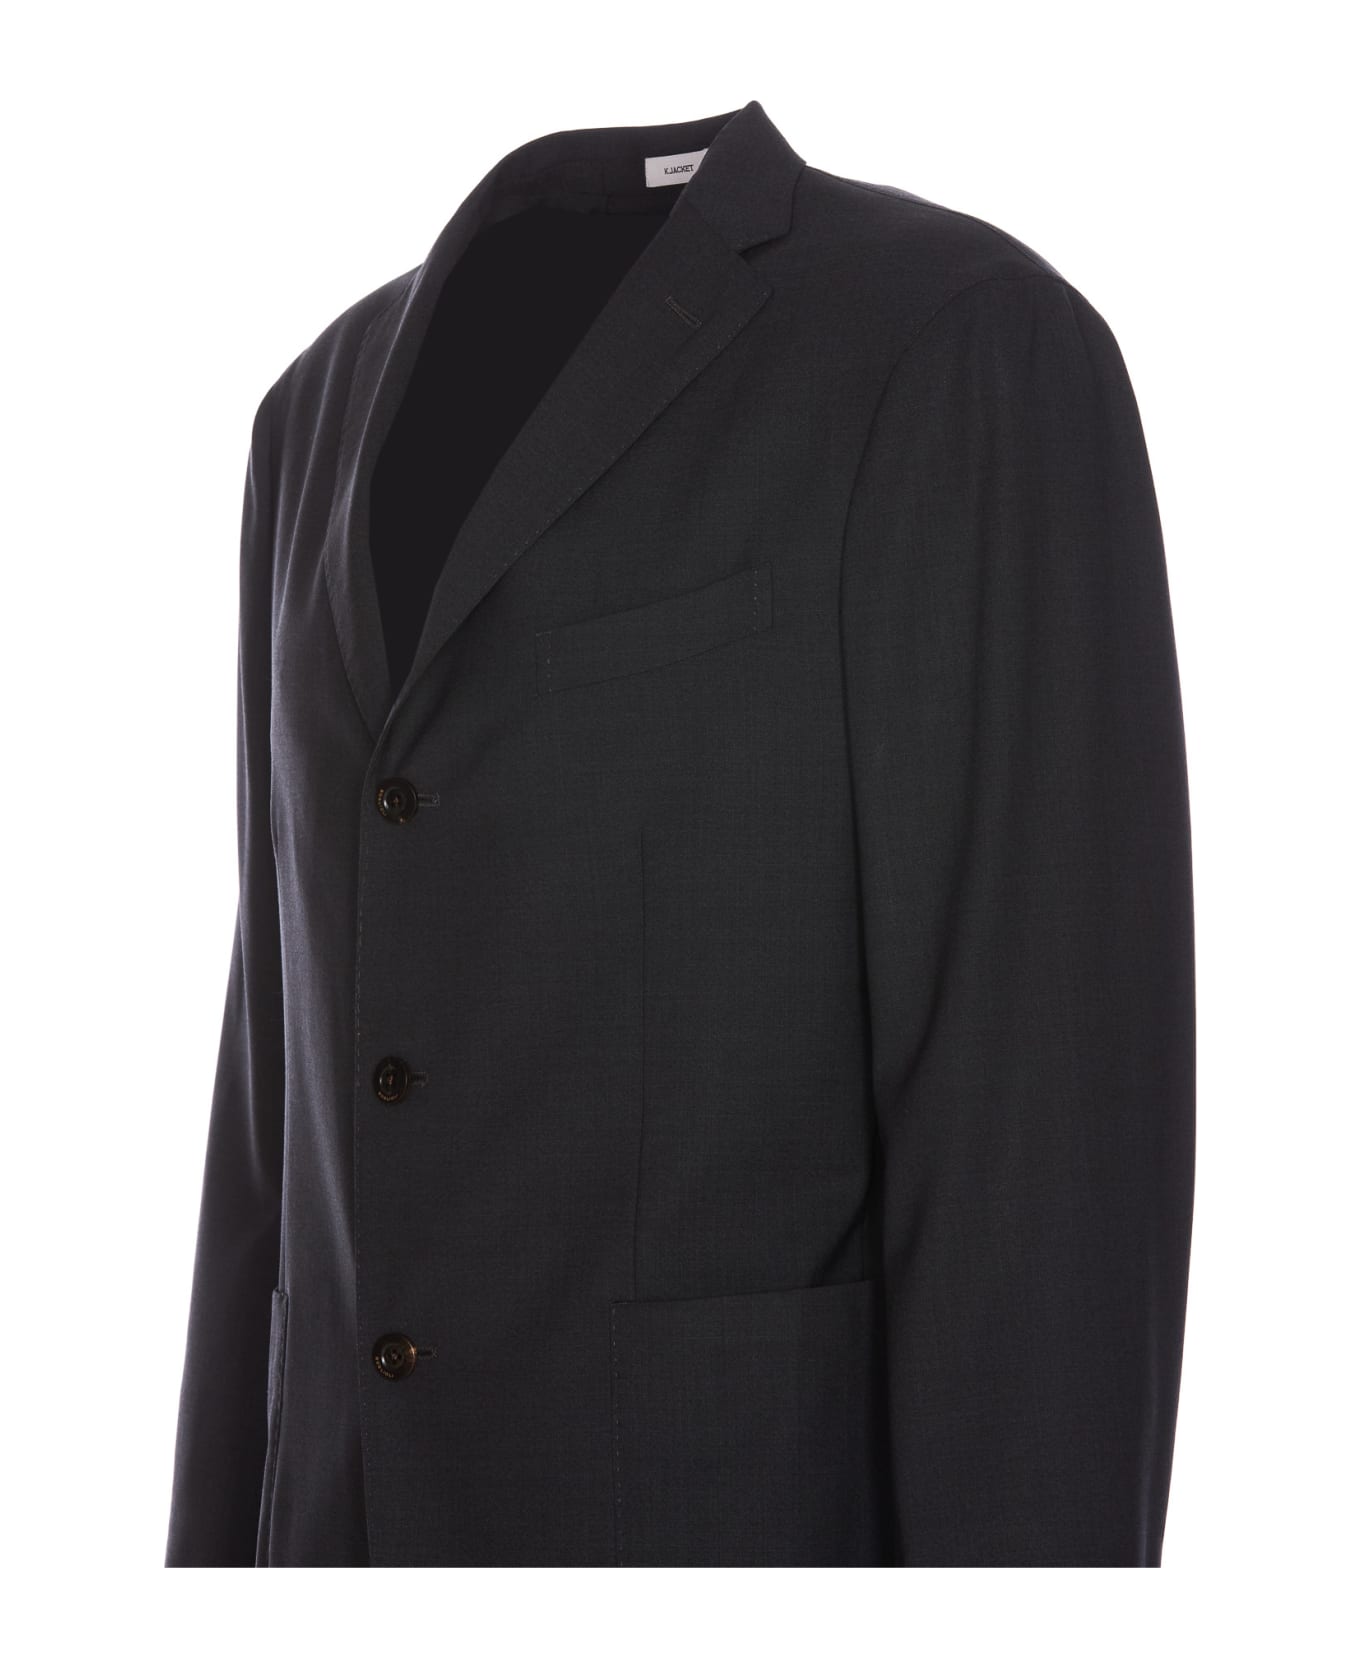 Boglioli Suit - Grey スーツ